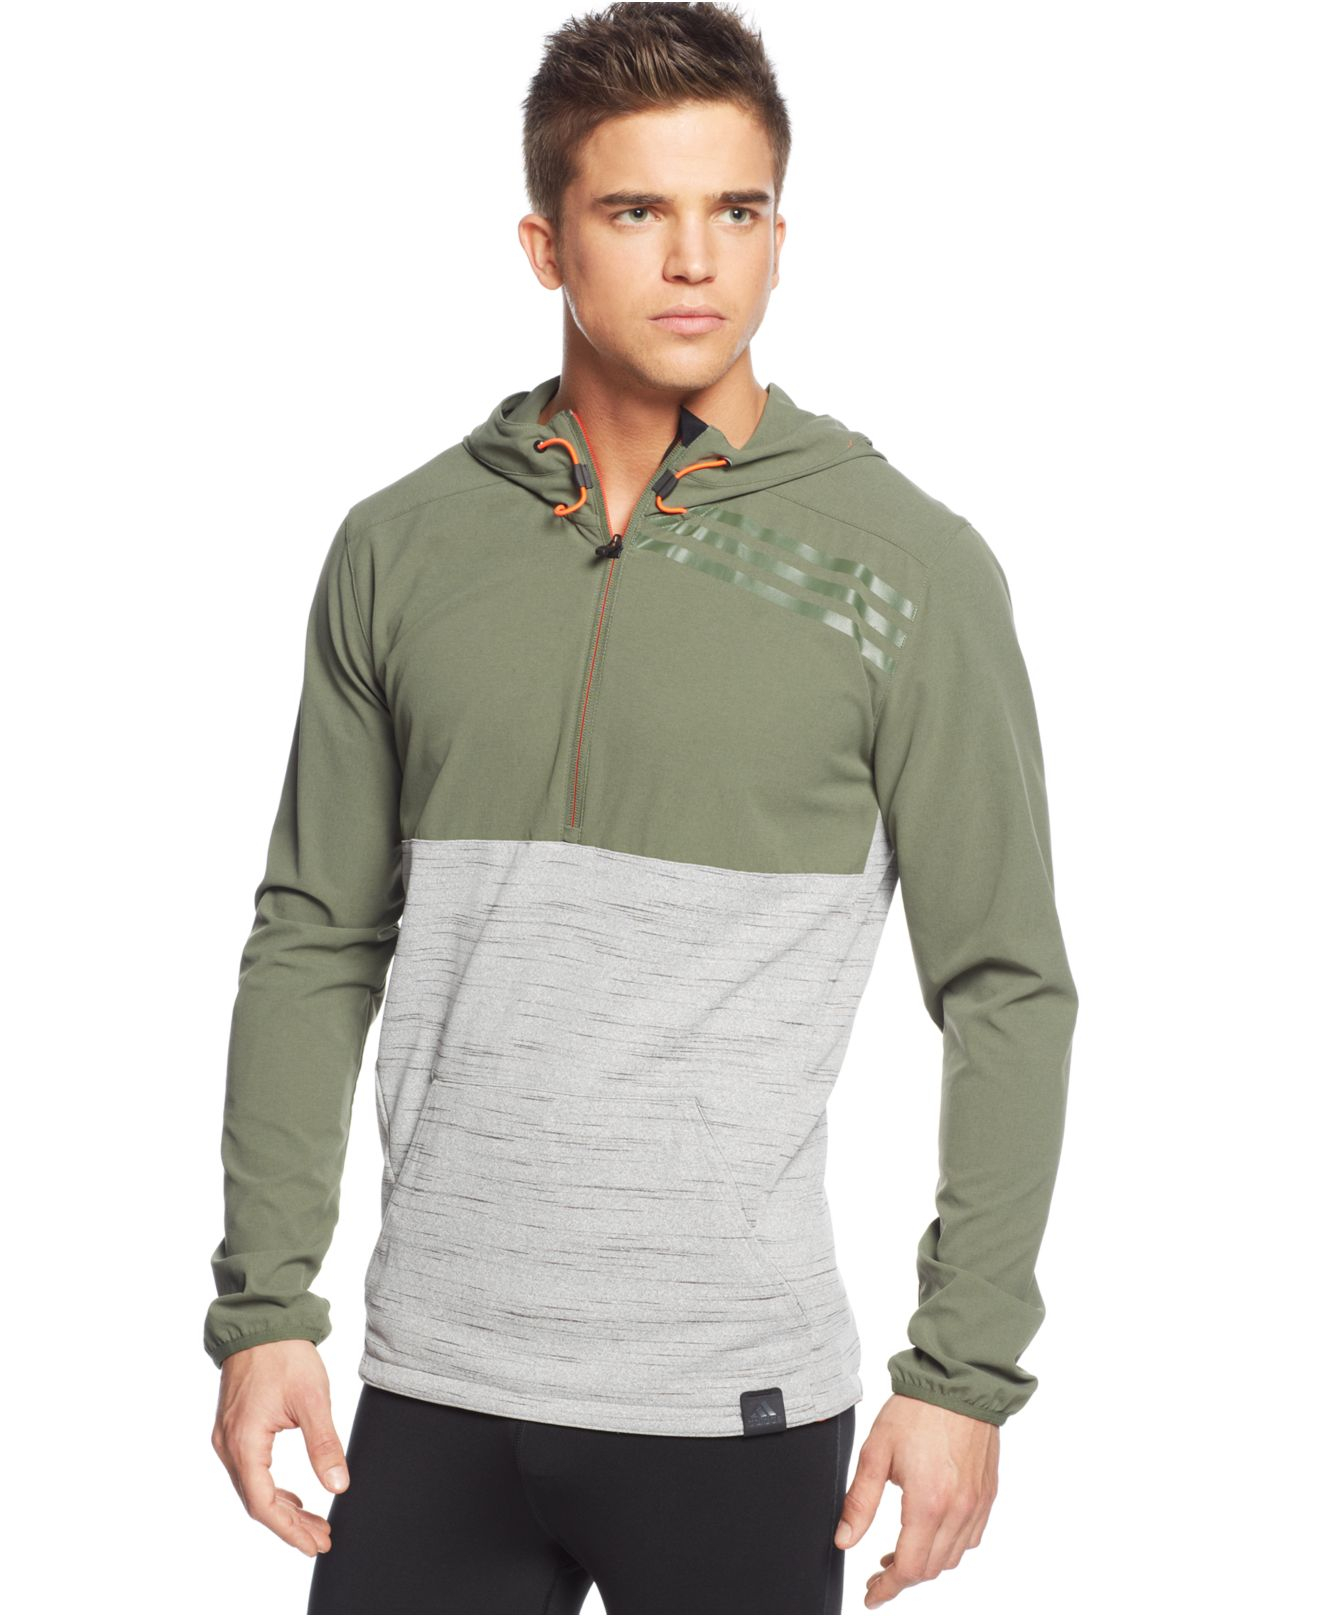 Lyst - Adidas Two-tone Half-zip Hoodie in Green for Men